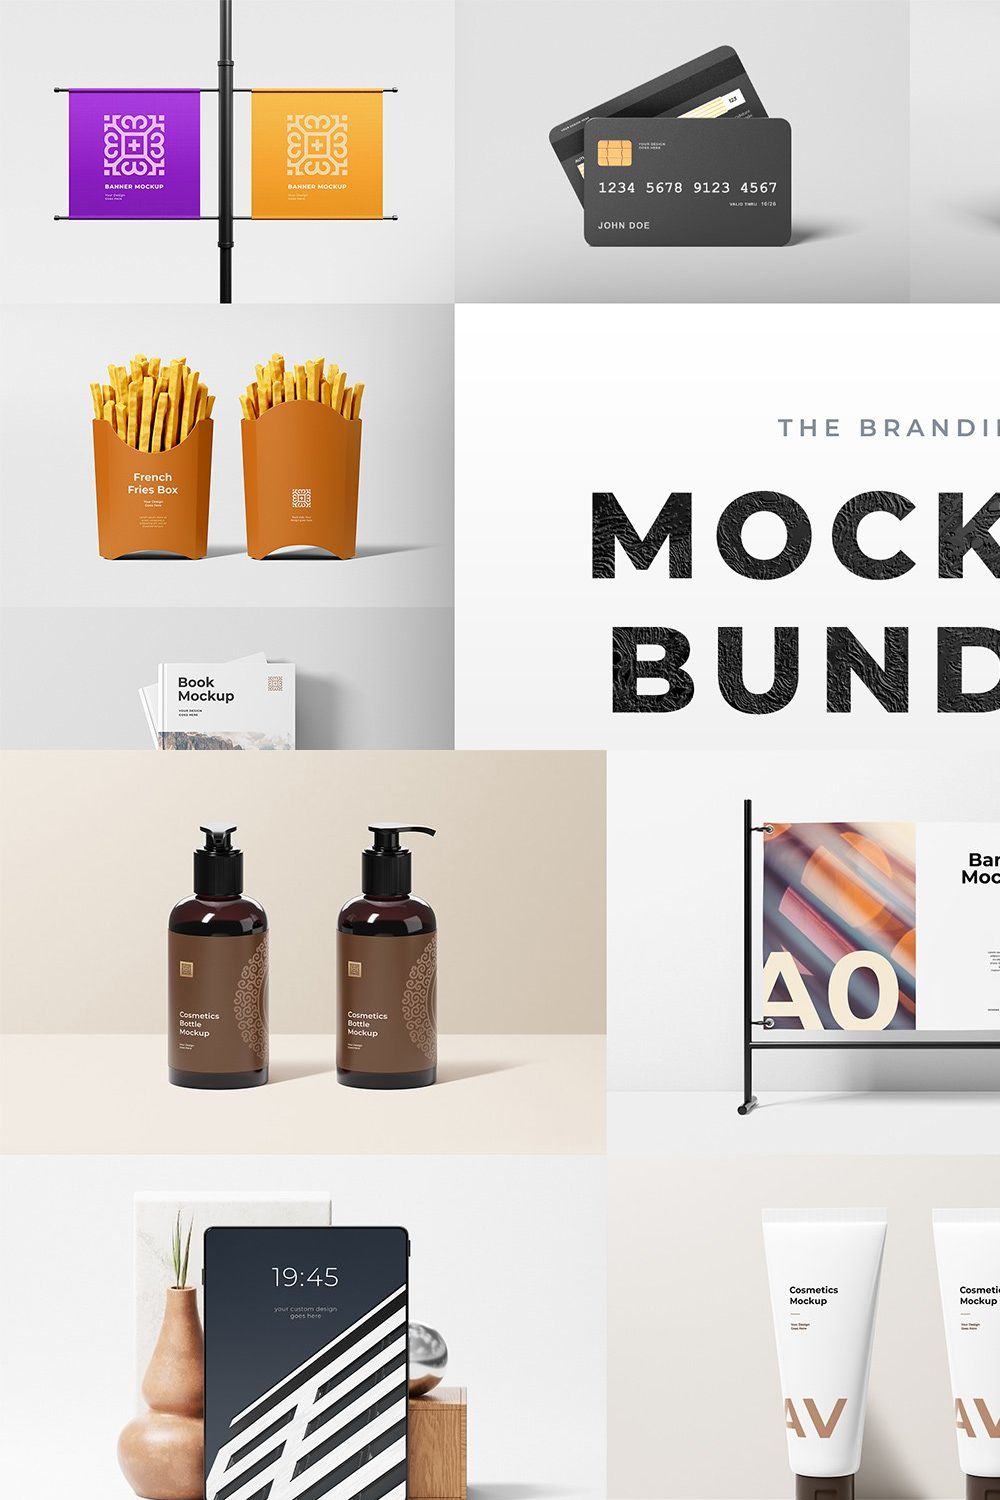 The Branding Mockup Bundle Vol.4 pinterest preview image.